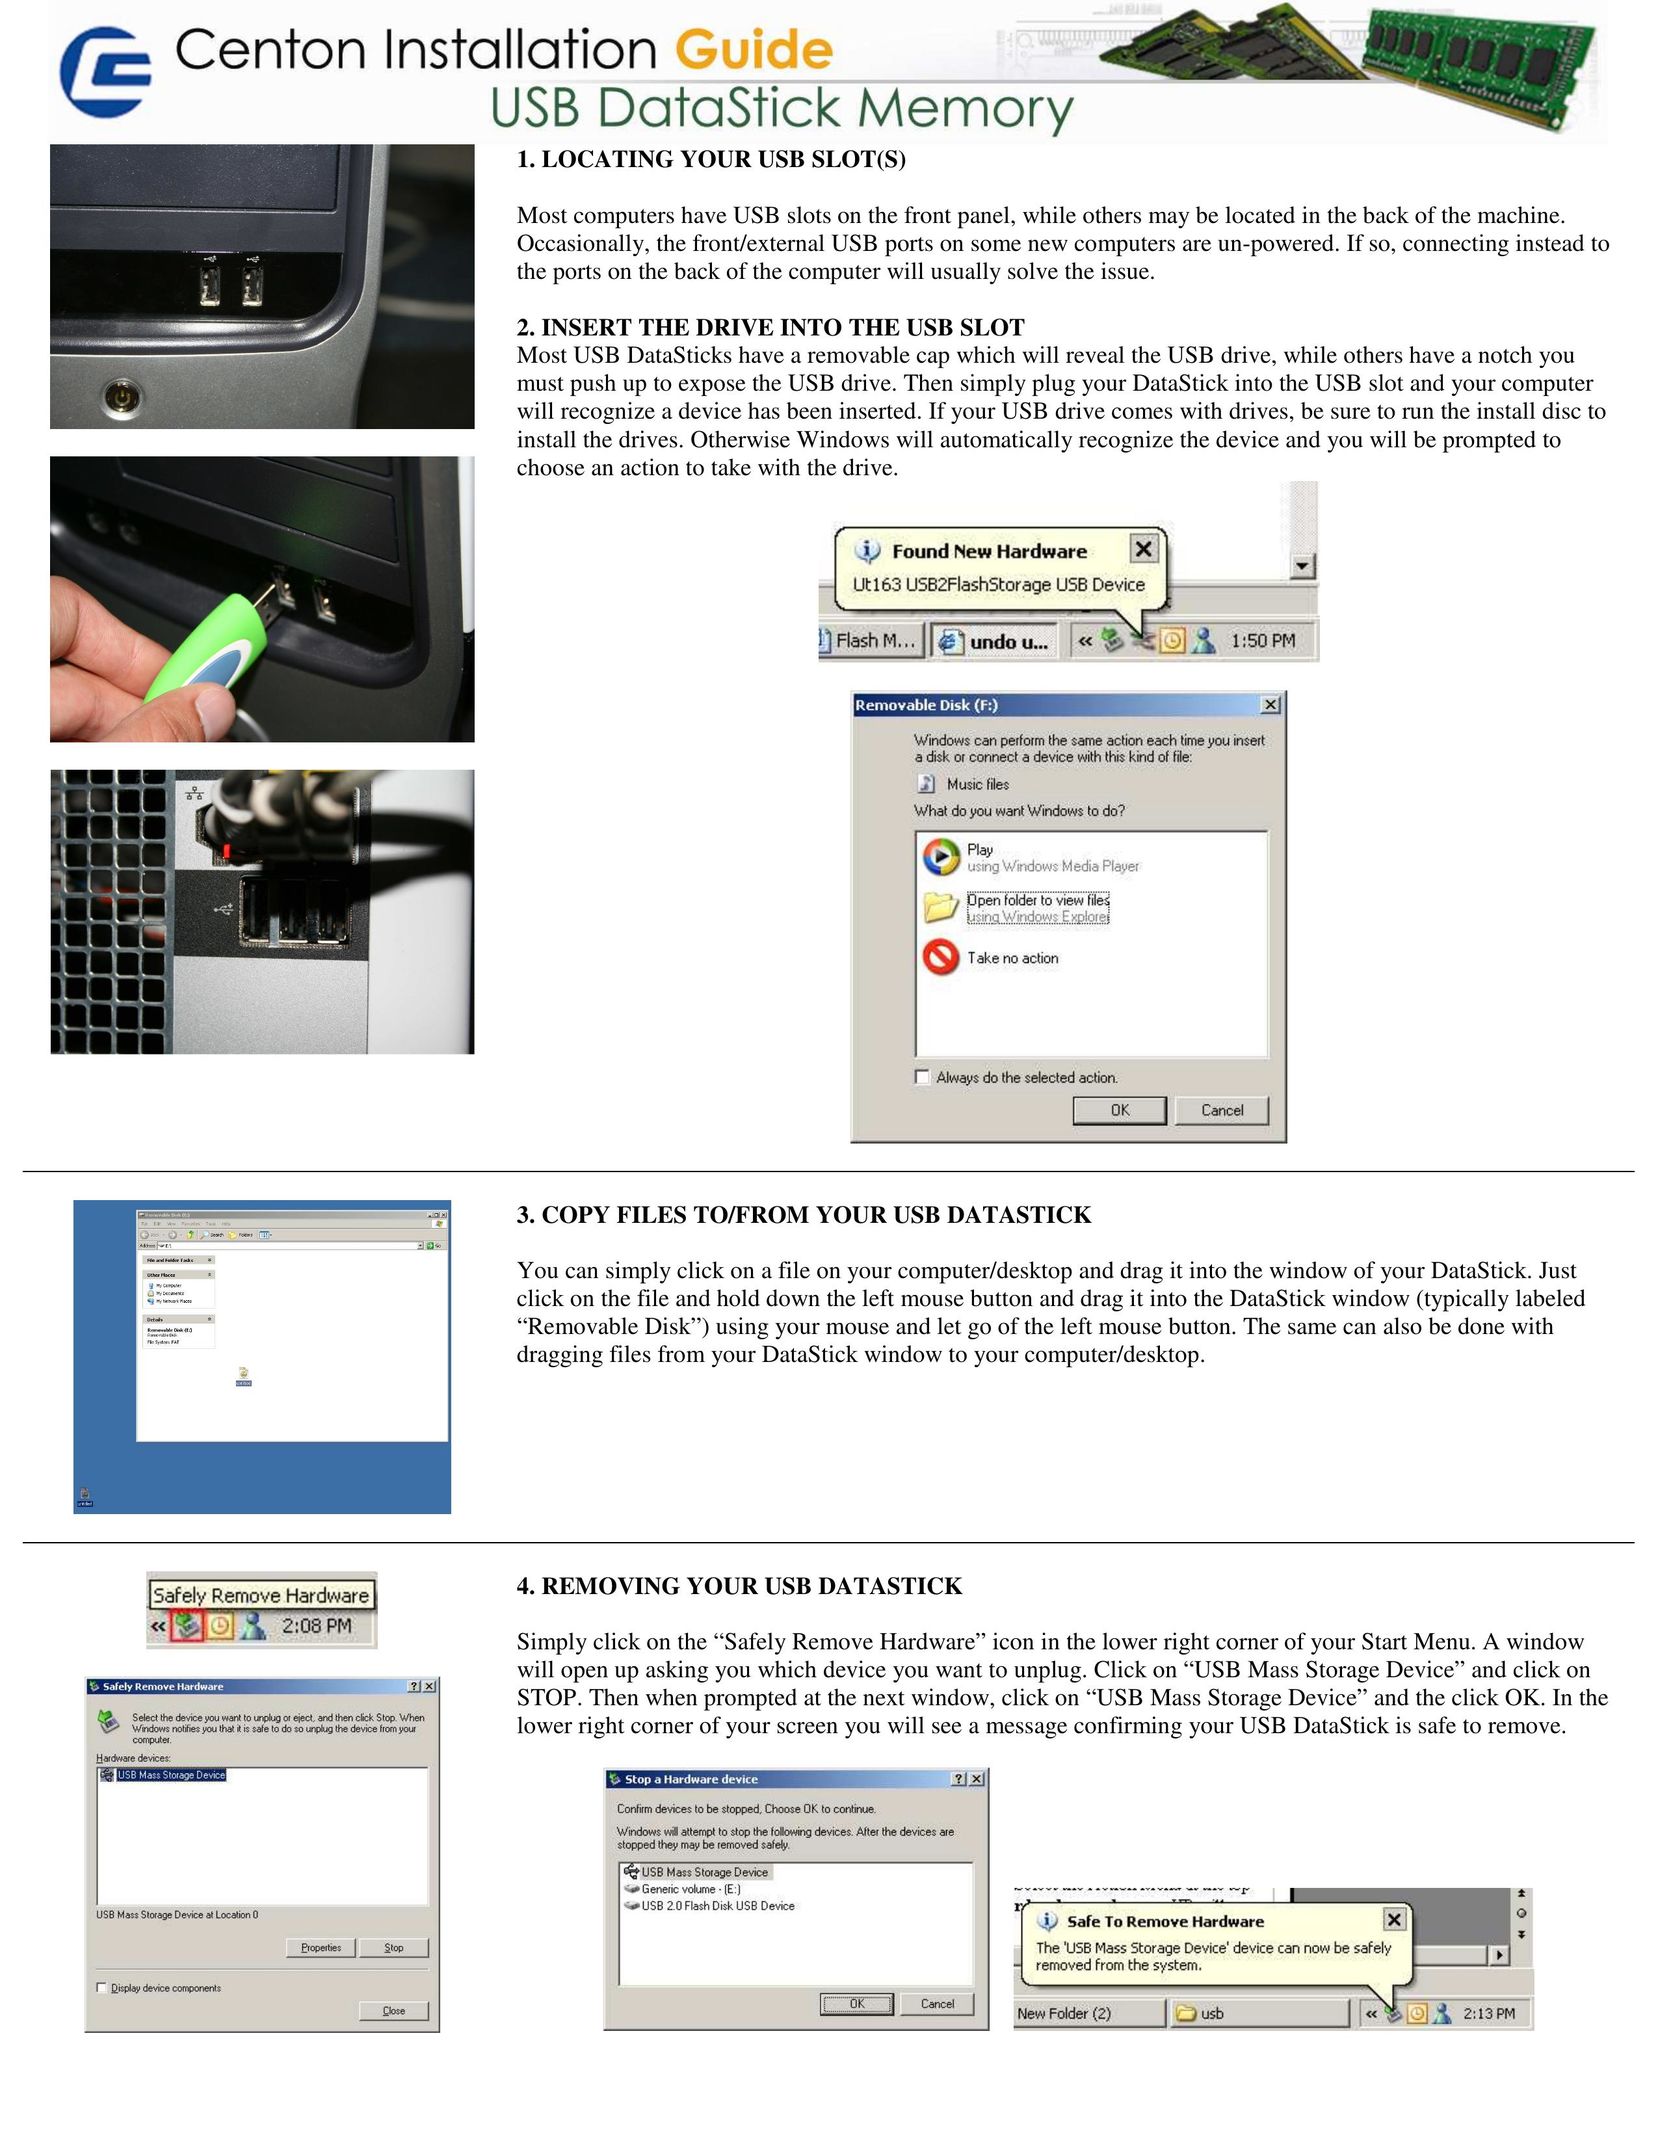 Centon electronic DSG4GB-001 Computer Accessories User Manual